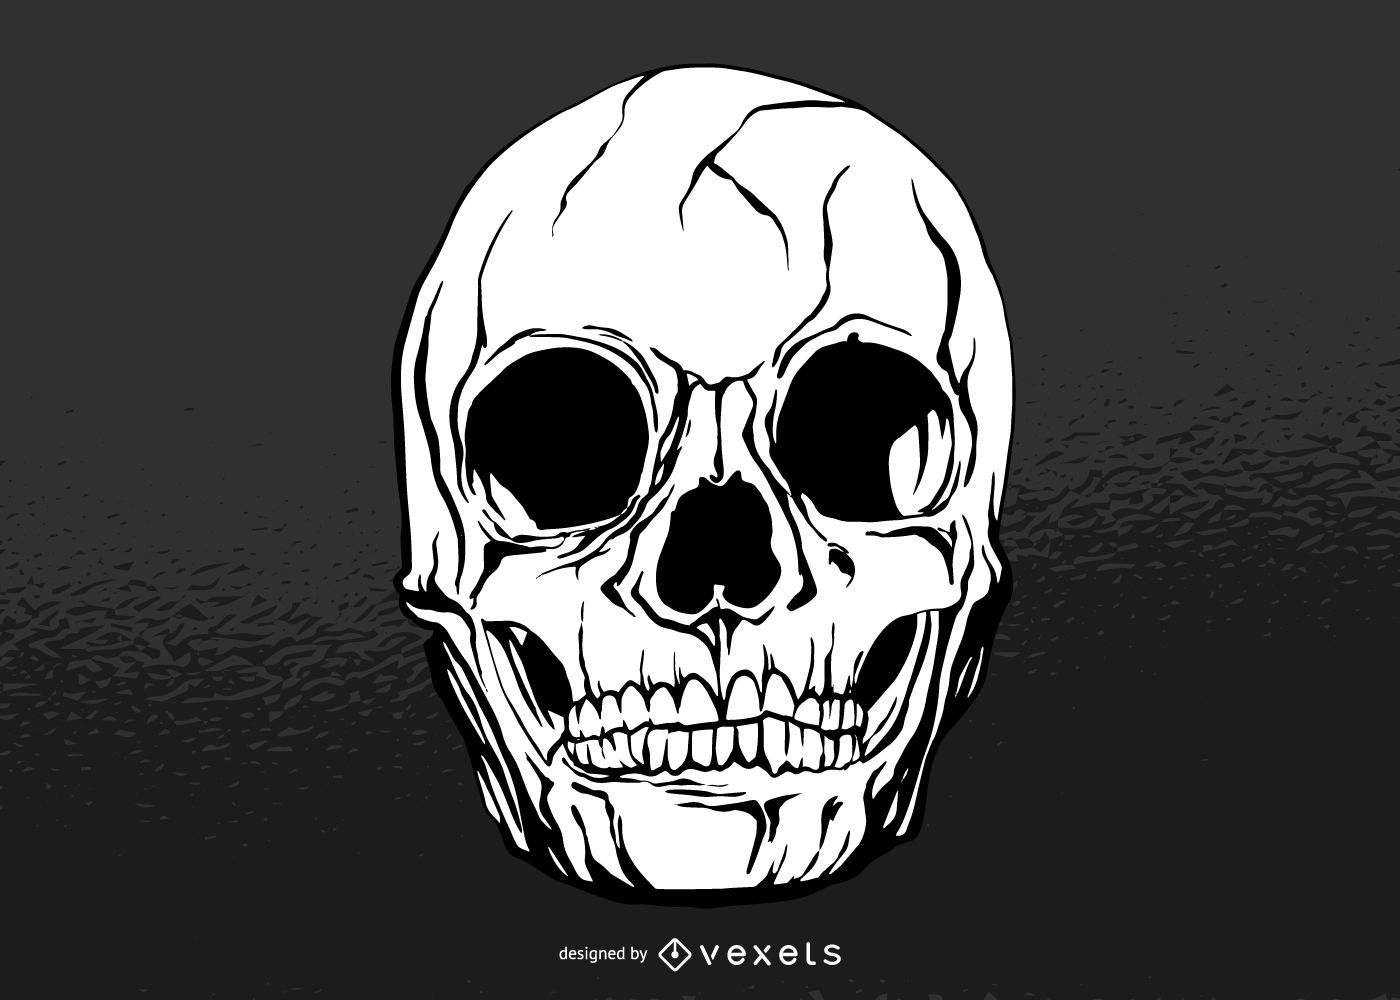 Cracked skull illustration design